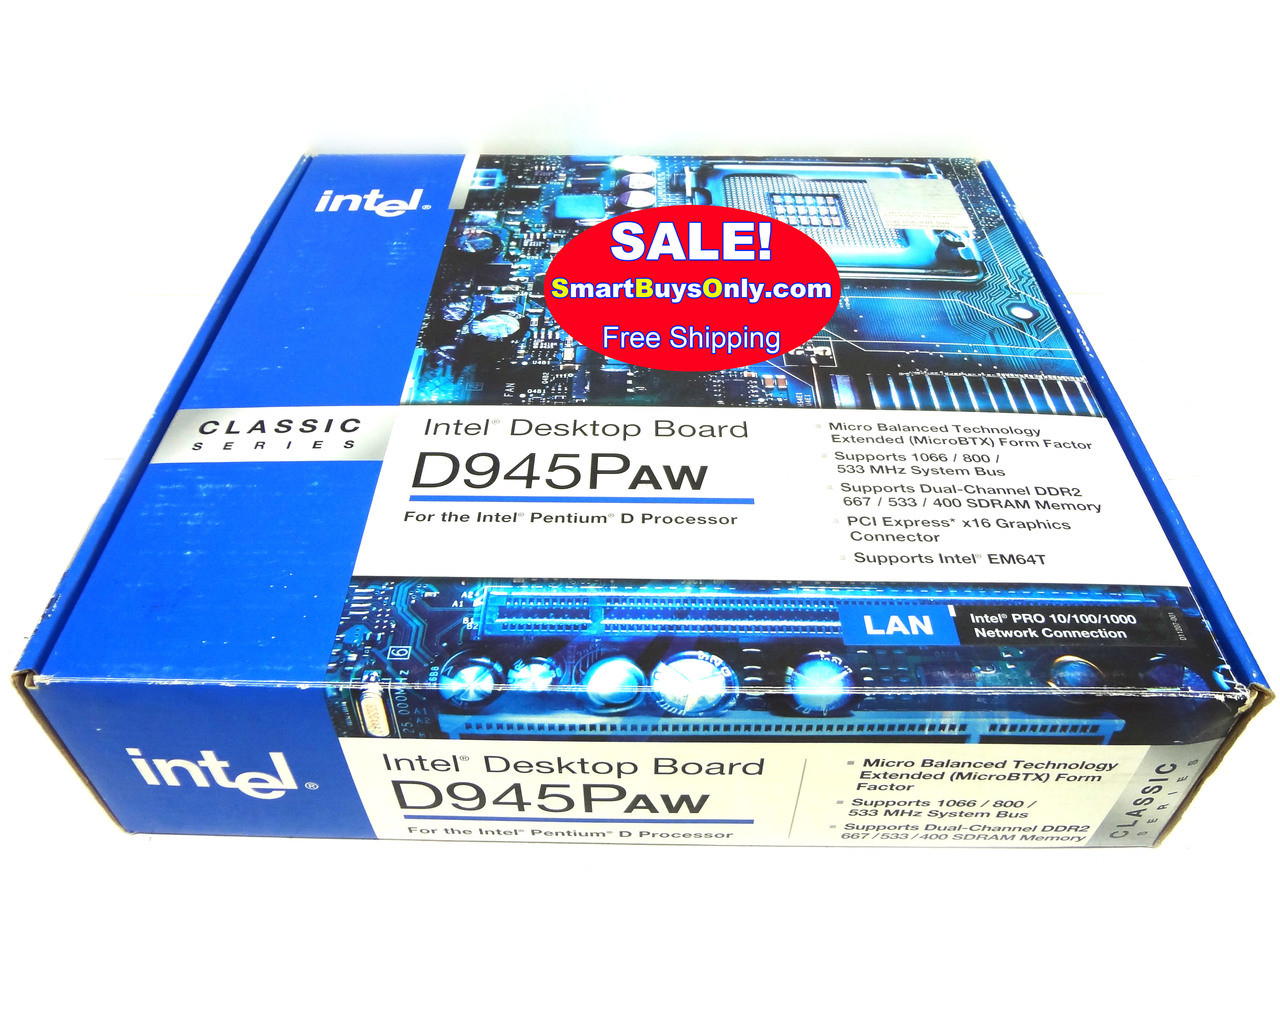 Intel D945Paw Desktop Motherboard, Supports Intel EM64T - SmartBuysOnly.com